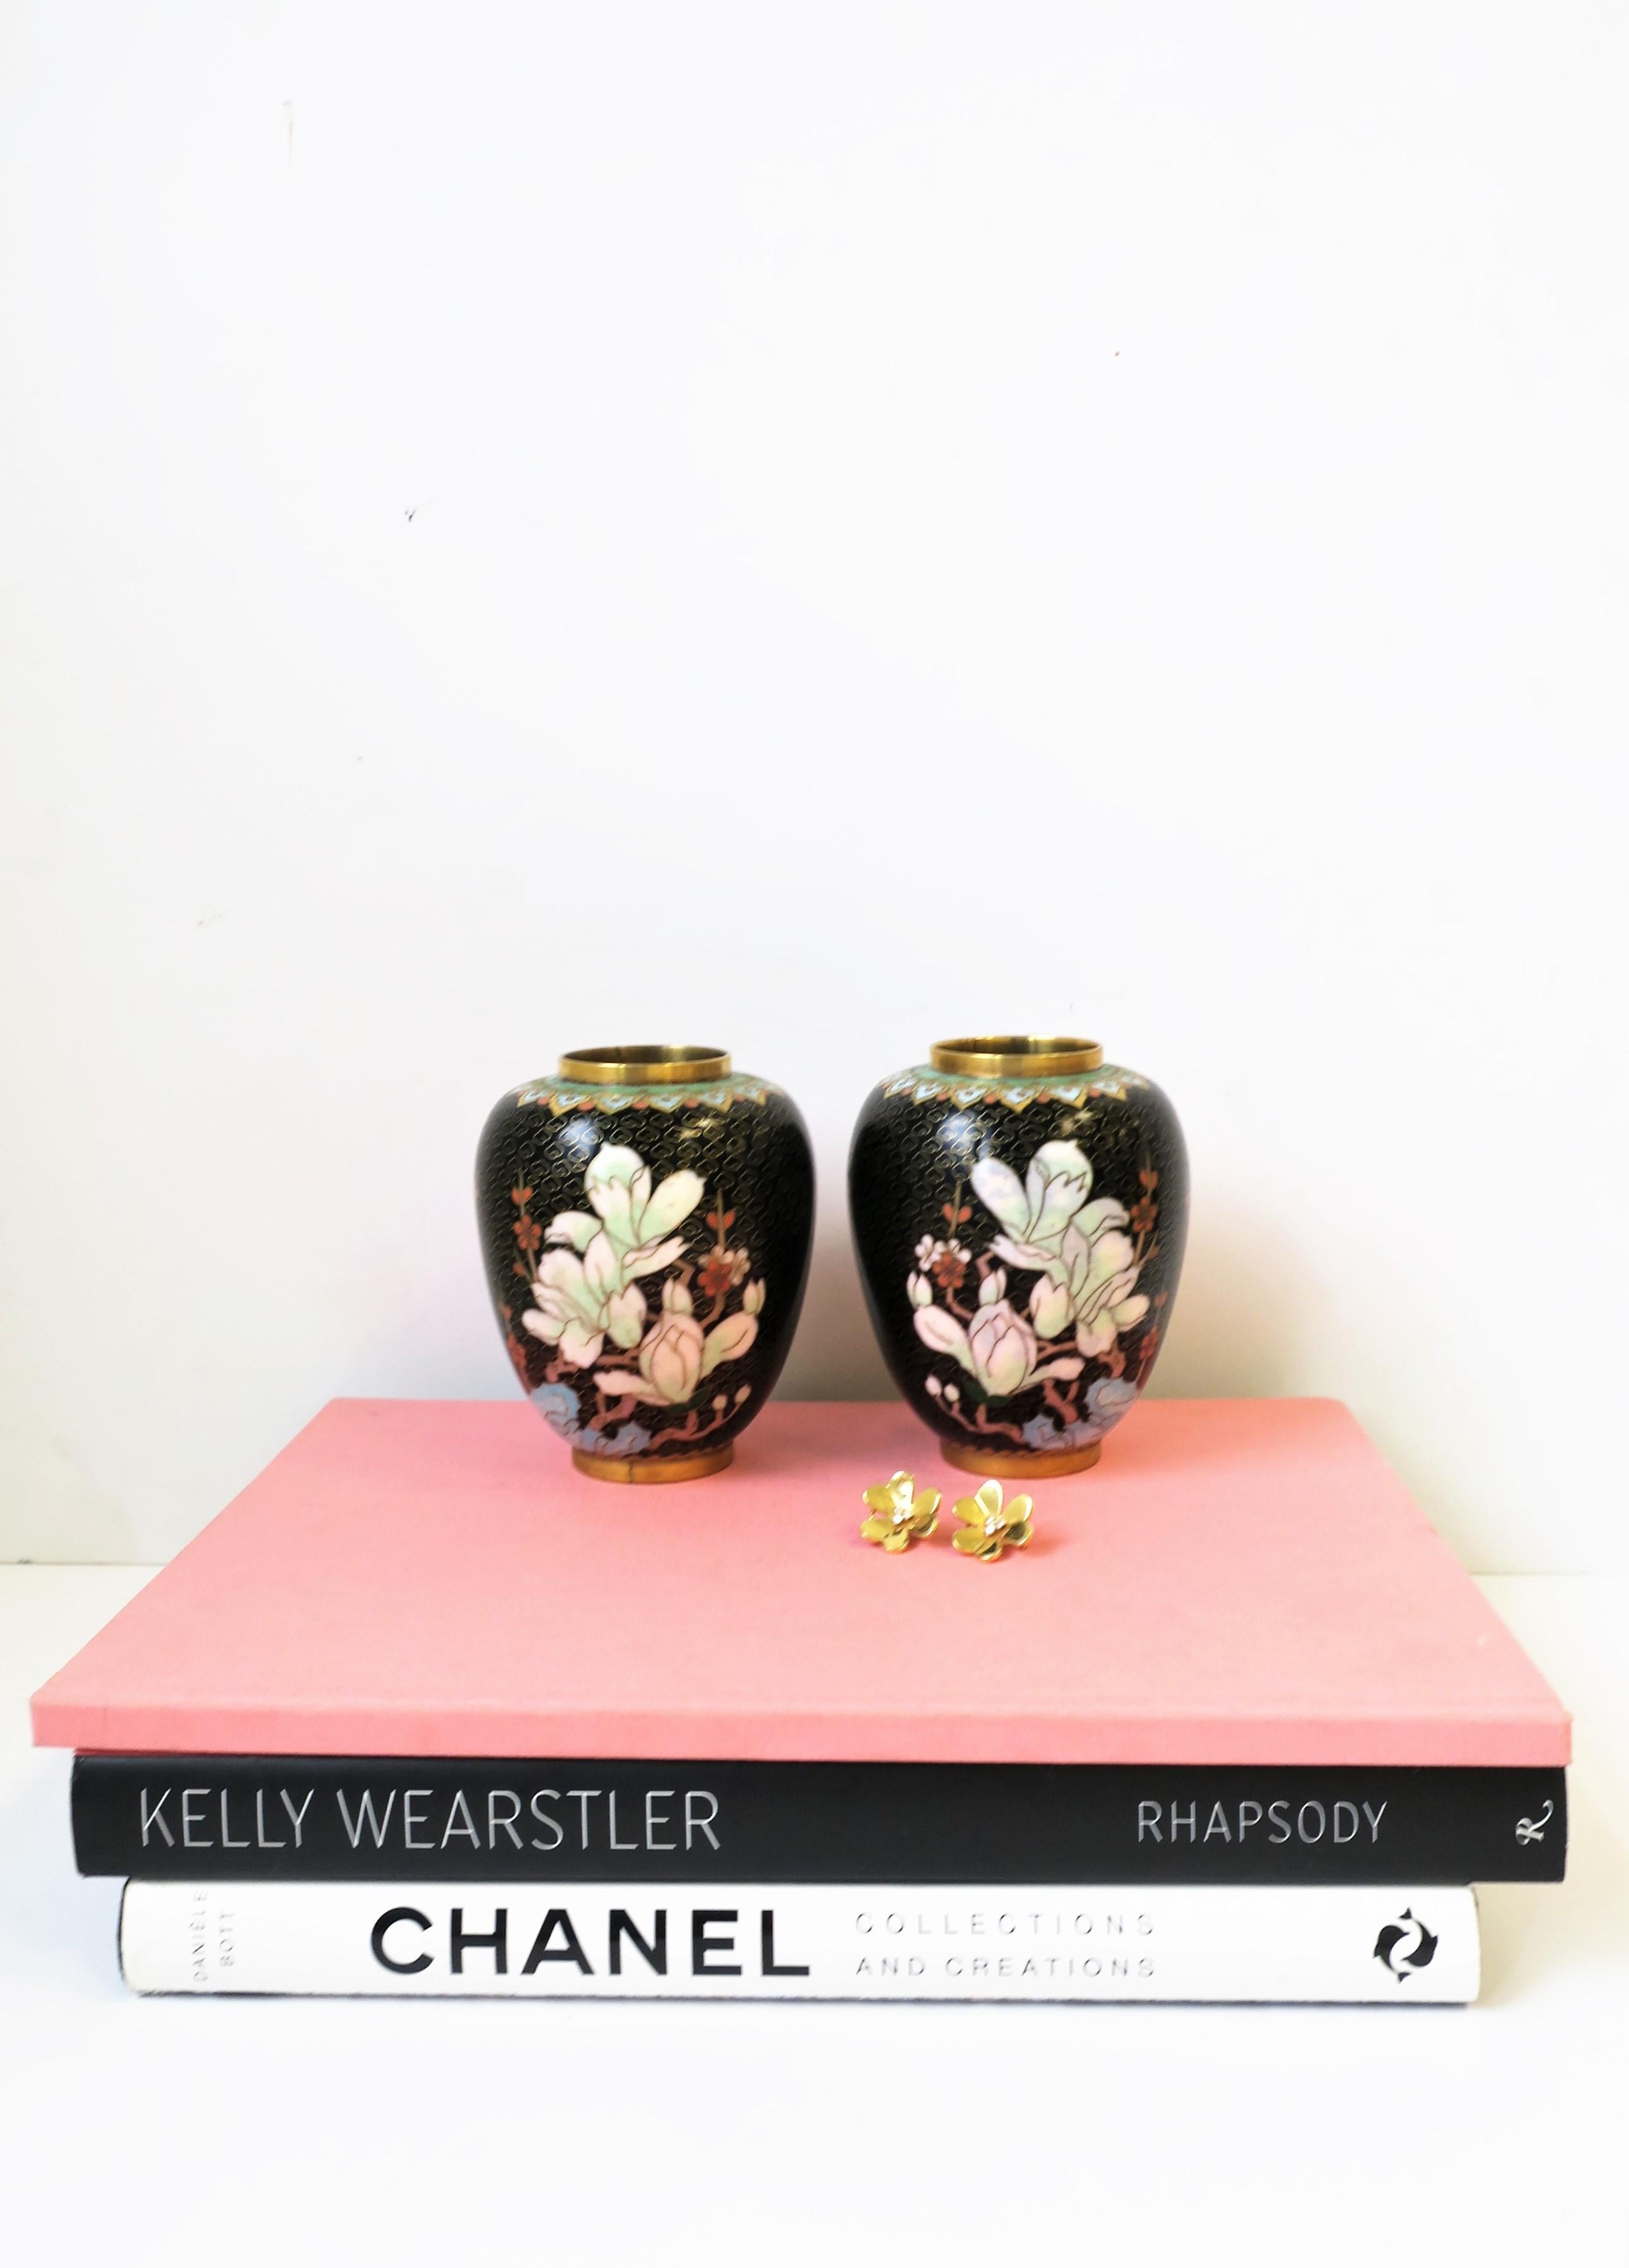 Cloisonné́ Enamel and Brass Flower Vases Black Gold and Pastel Colors, Pair For Sale 7